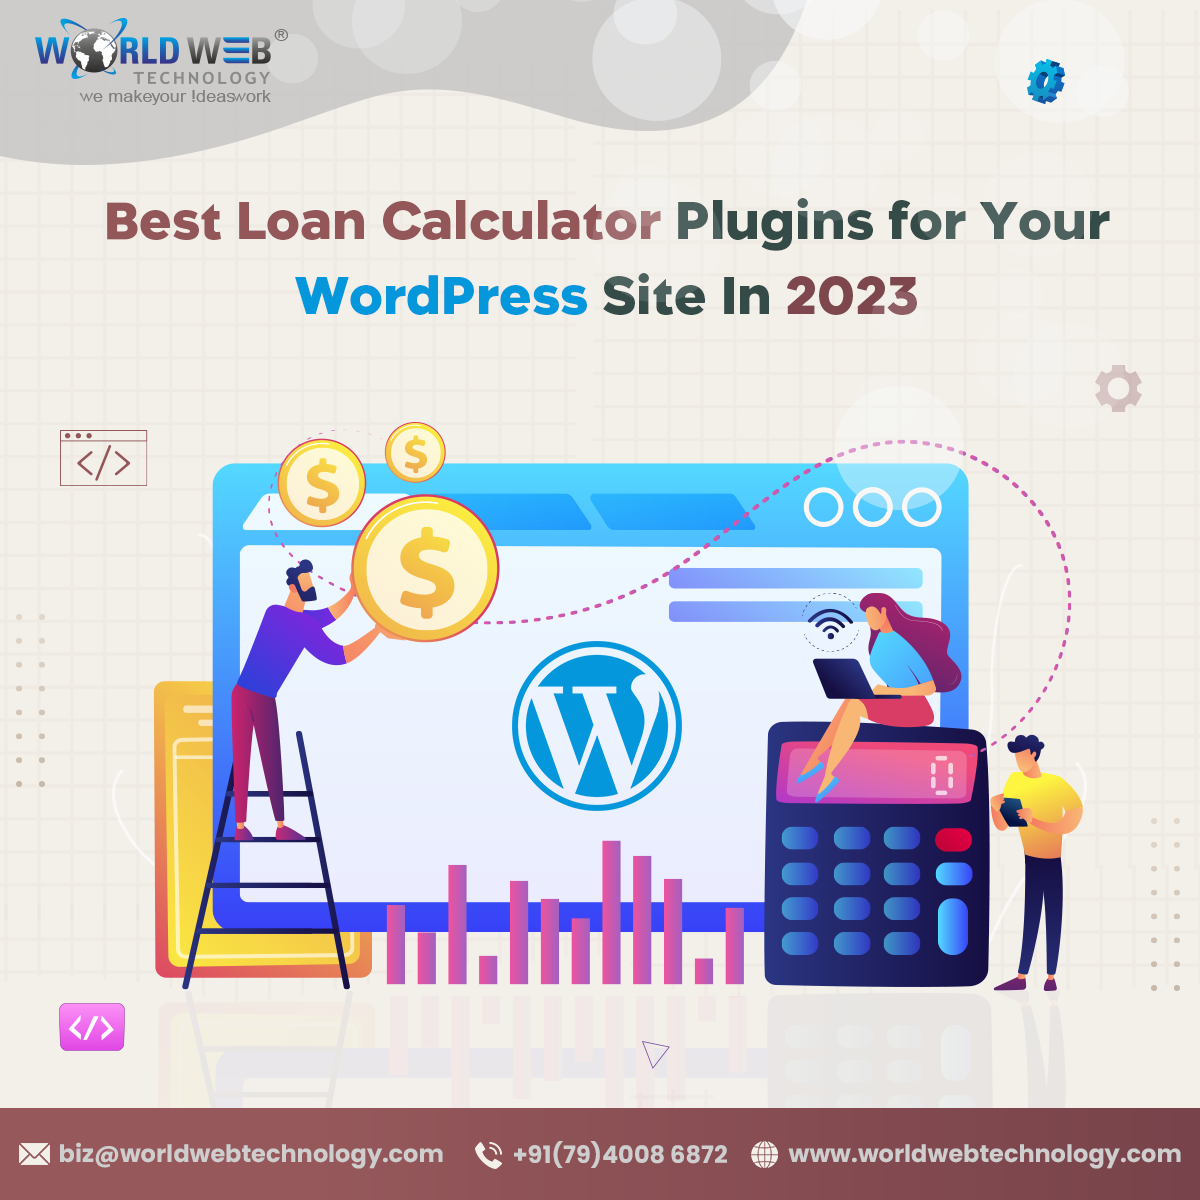 Best Loan Calculator Plugins for Your WordPress Site In 2023